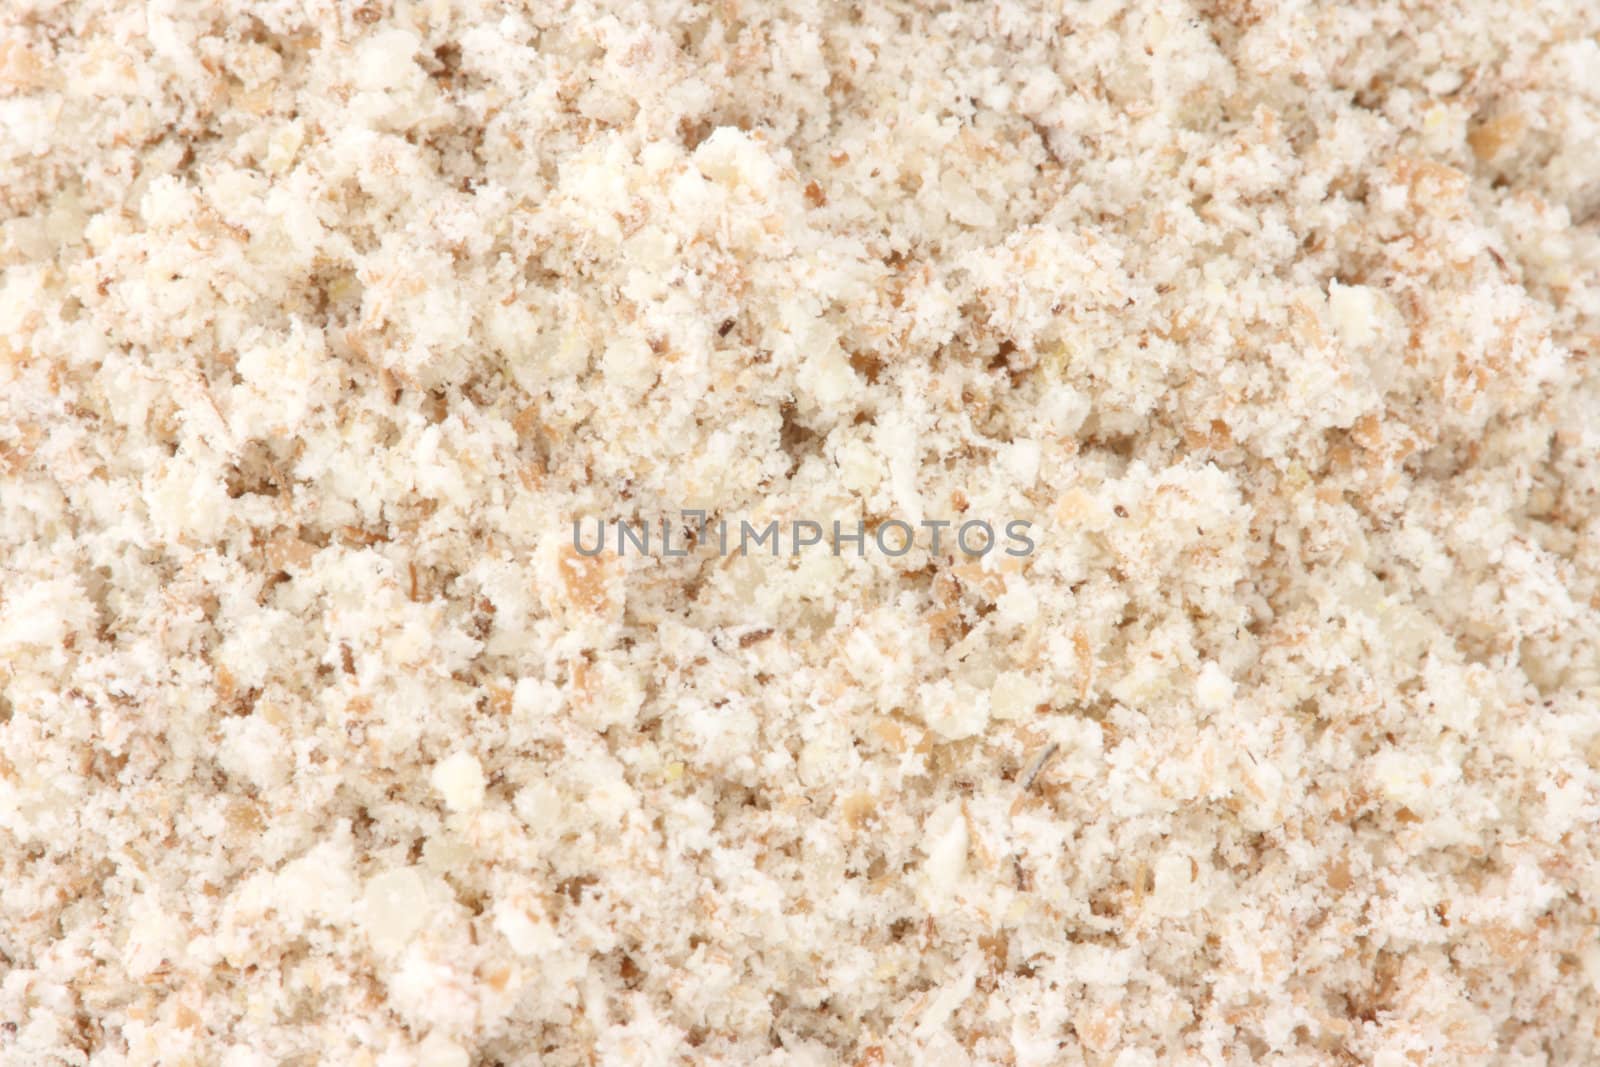 Flour - wholemeal type by Danicek